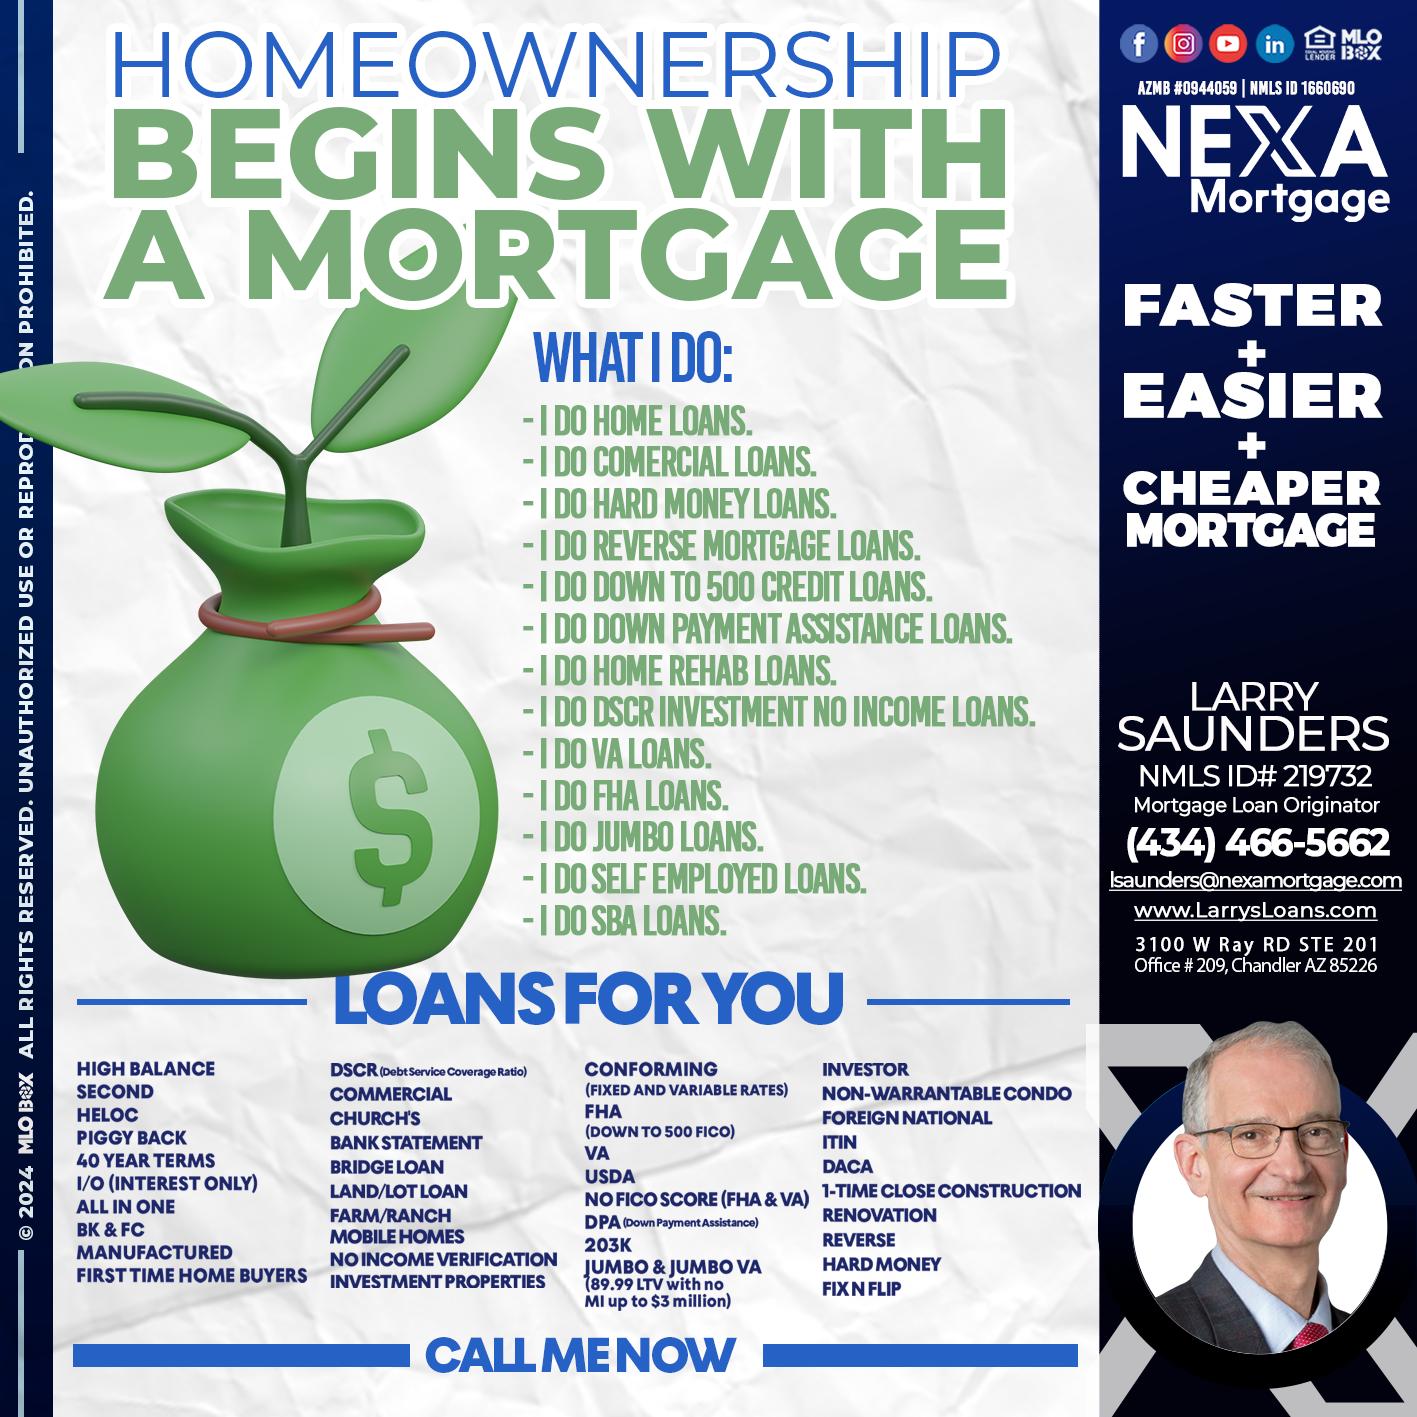 HOME OWNERSHIP - Larry Saunders -Mortgage Loan Originator